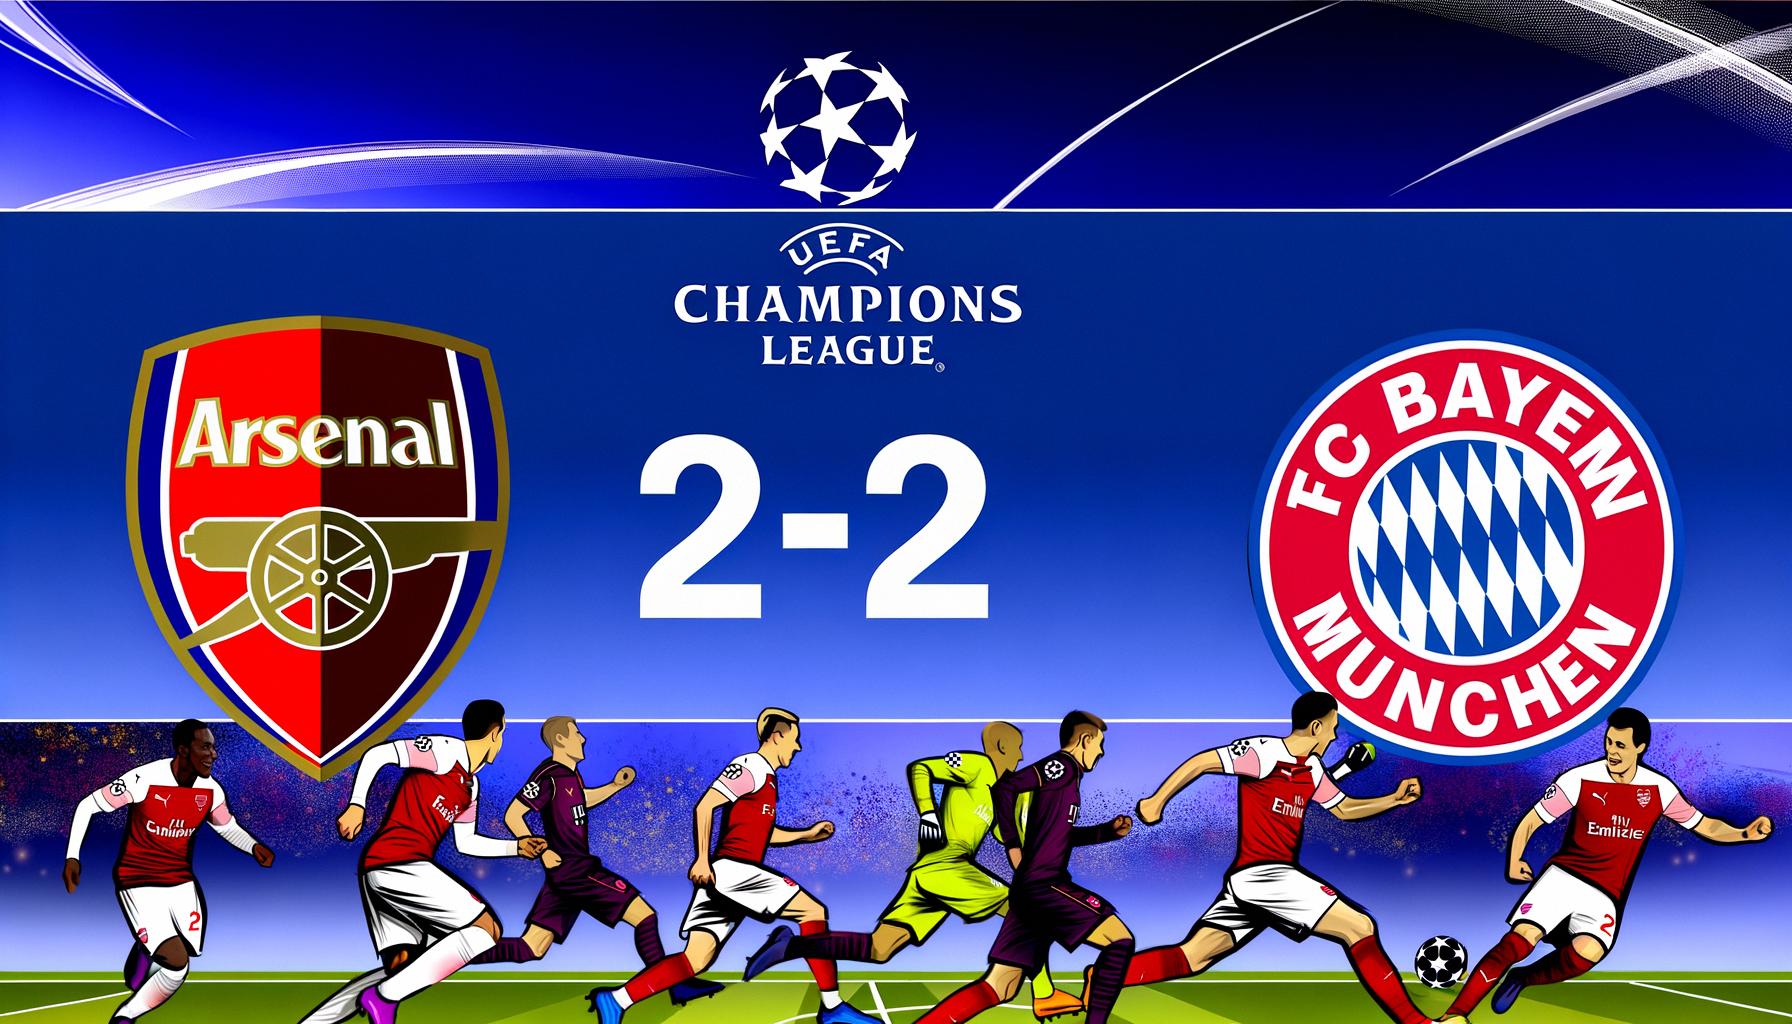 Arsenal drew with Bayern Munich 2-2 in a Champions League match.